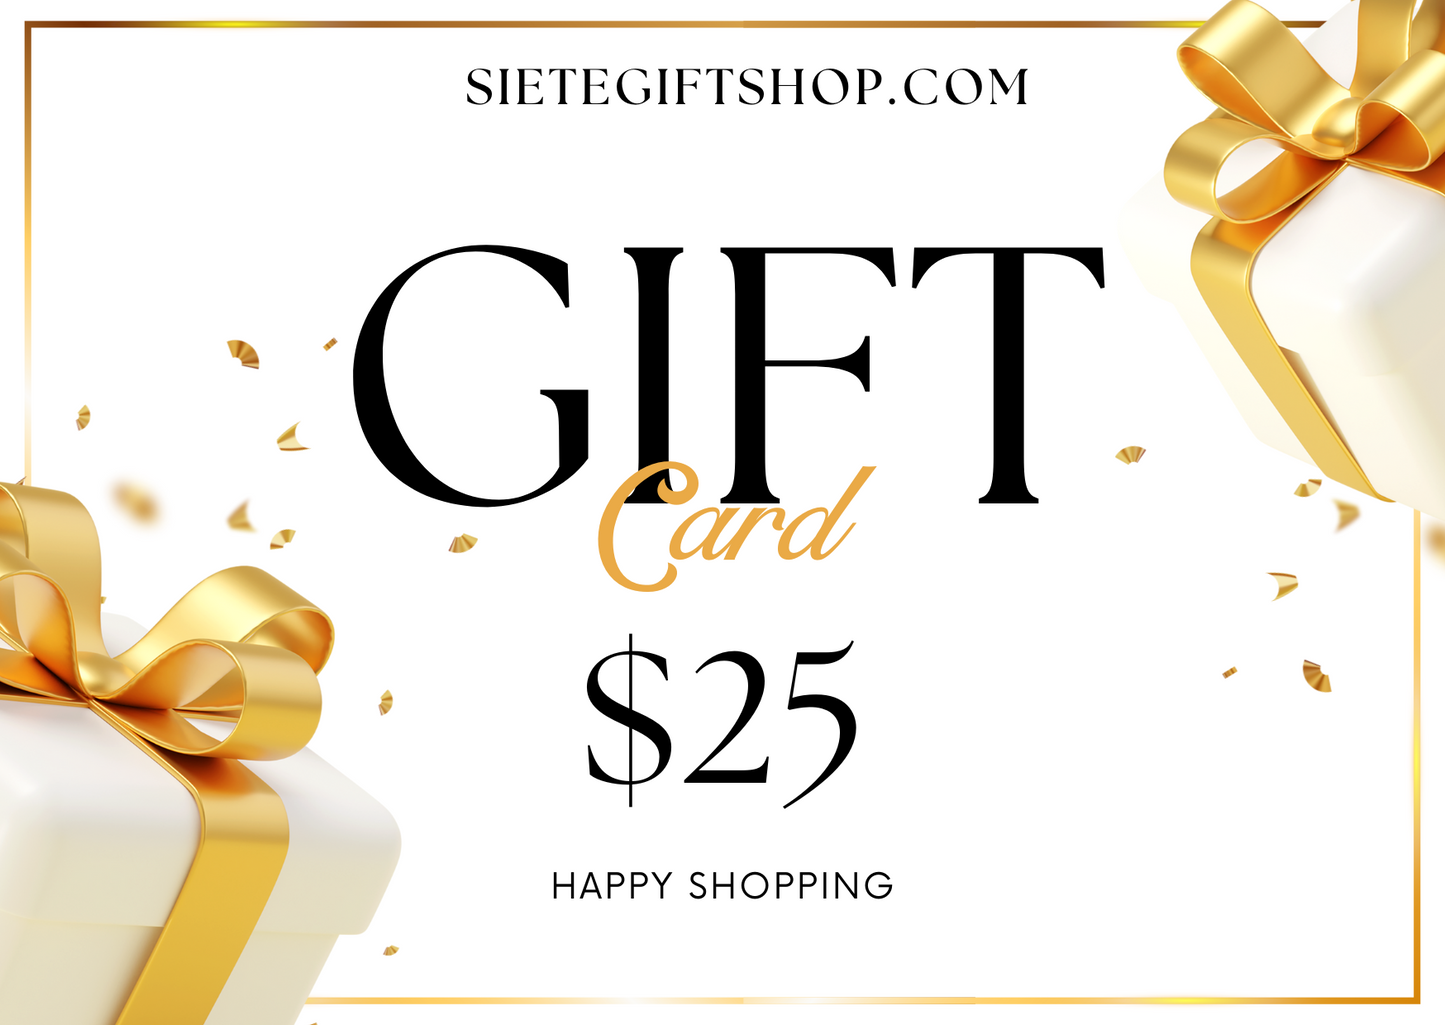 Siete Gift Shop - Gift Card